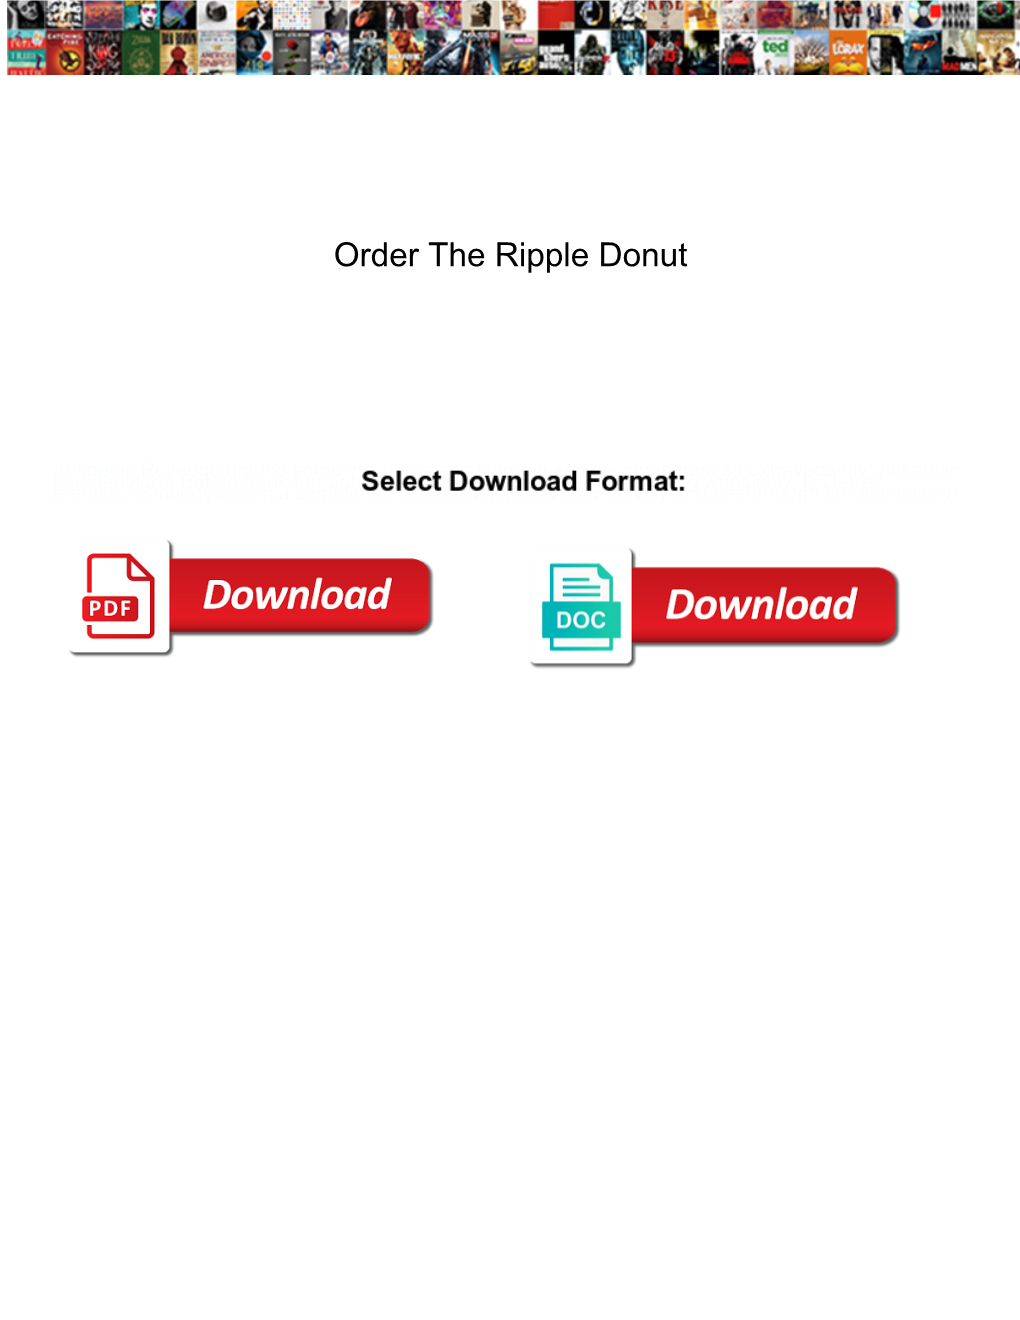 Order the Ripple Donut